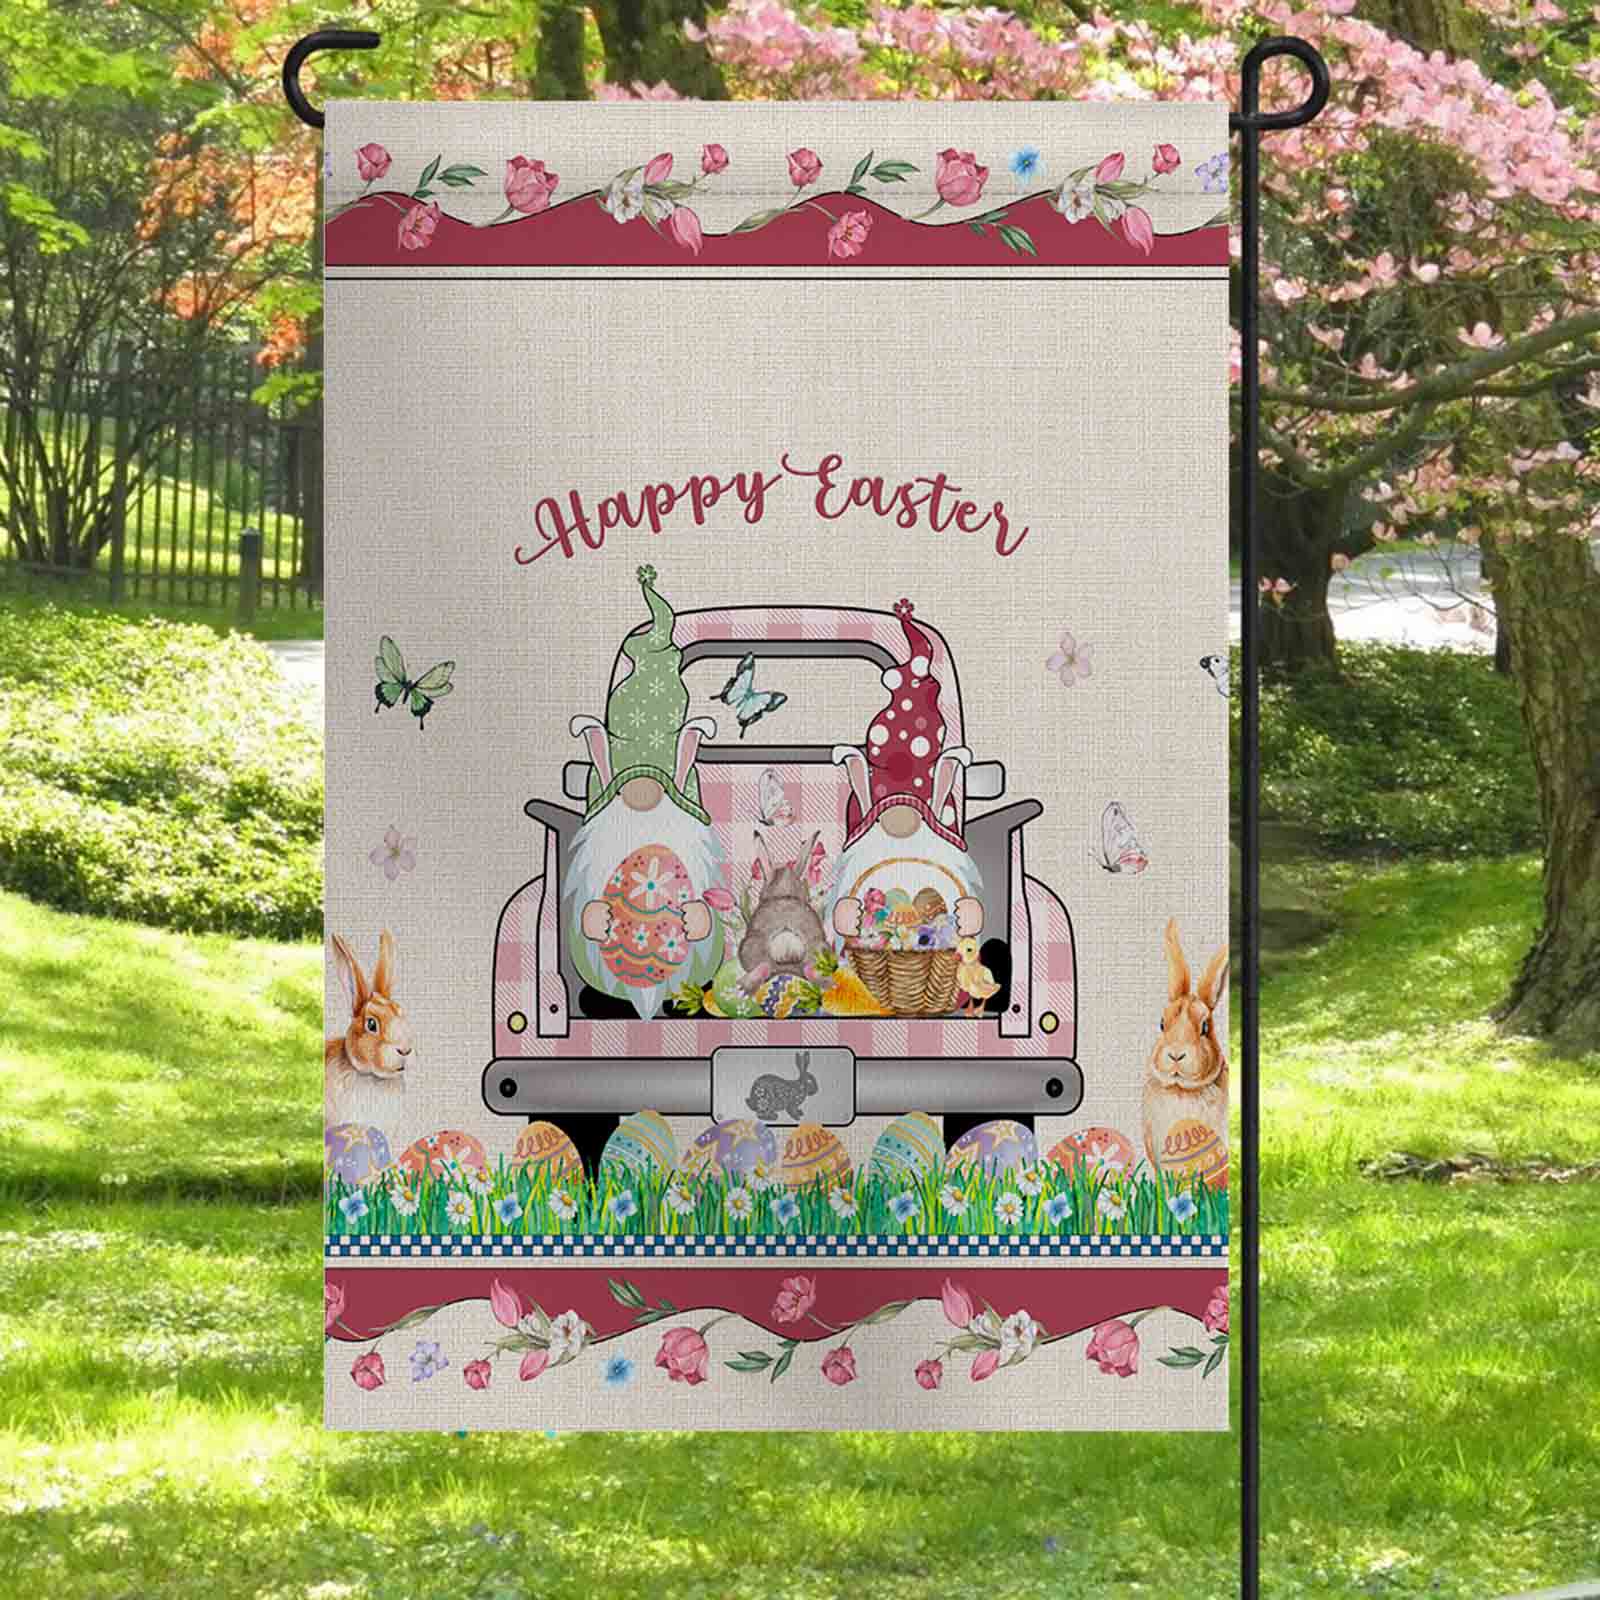 Happy Easter - Bunny Gnome Themed Garden Flag